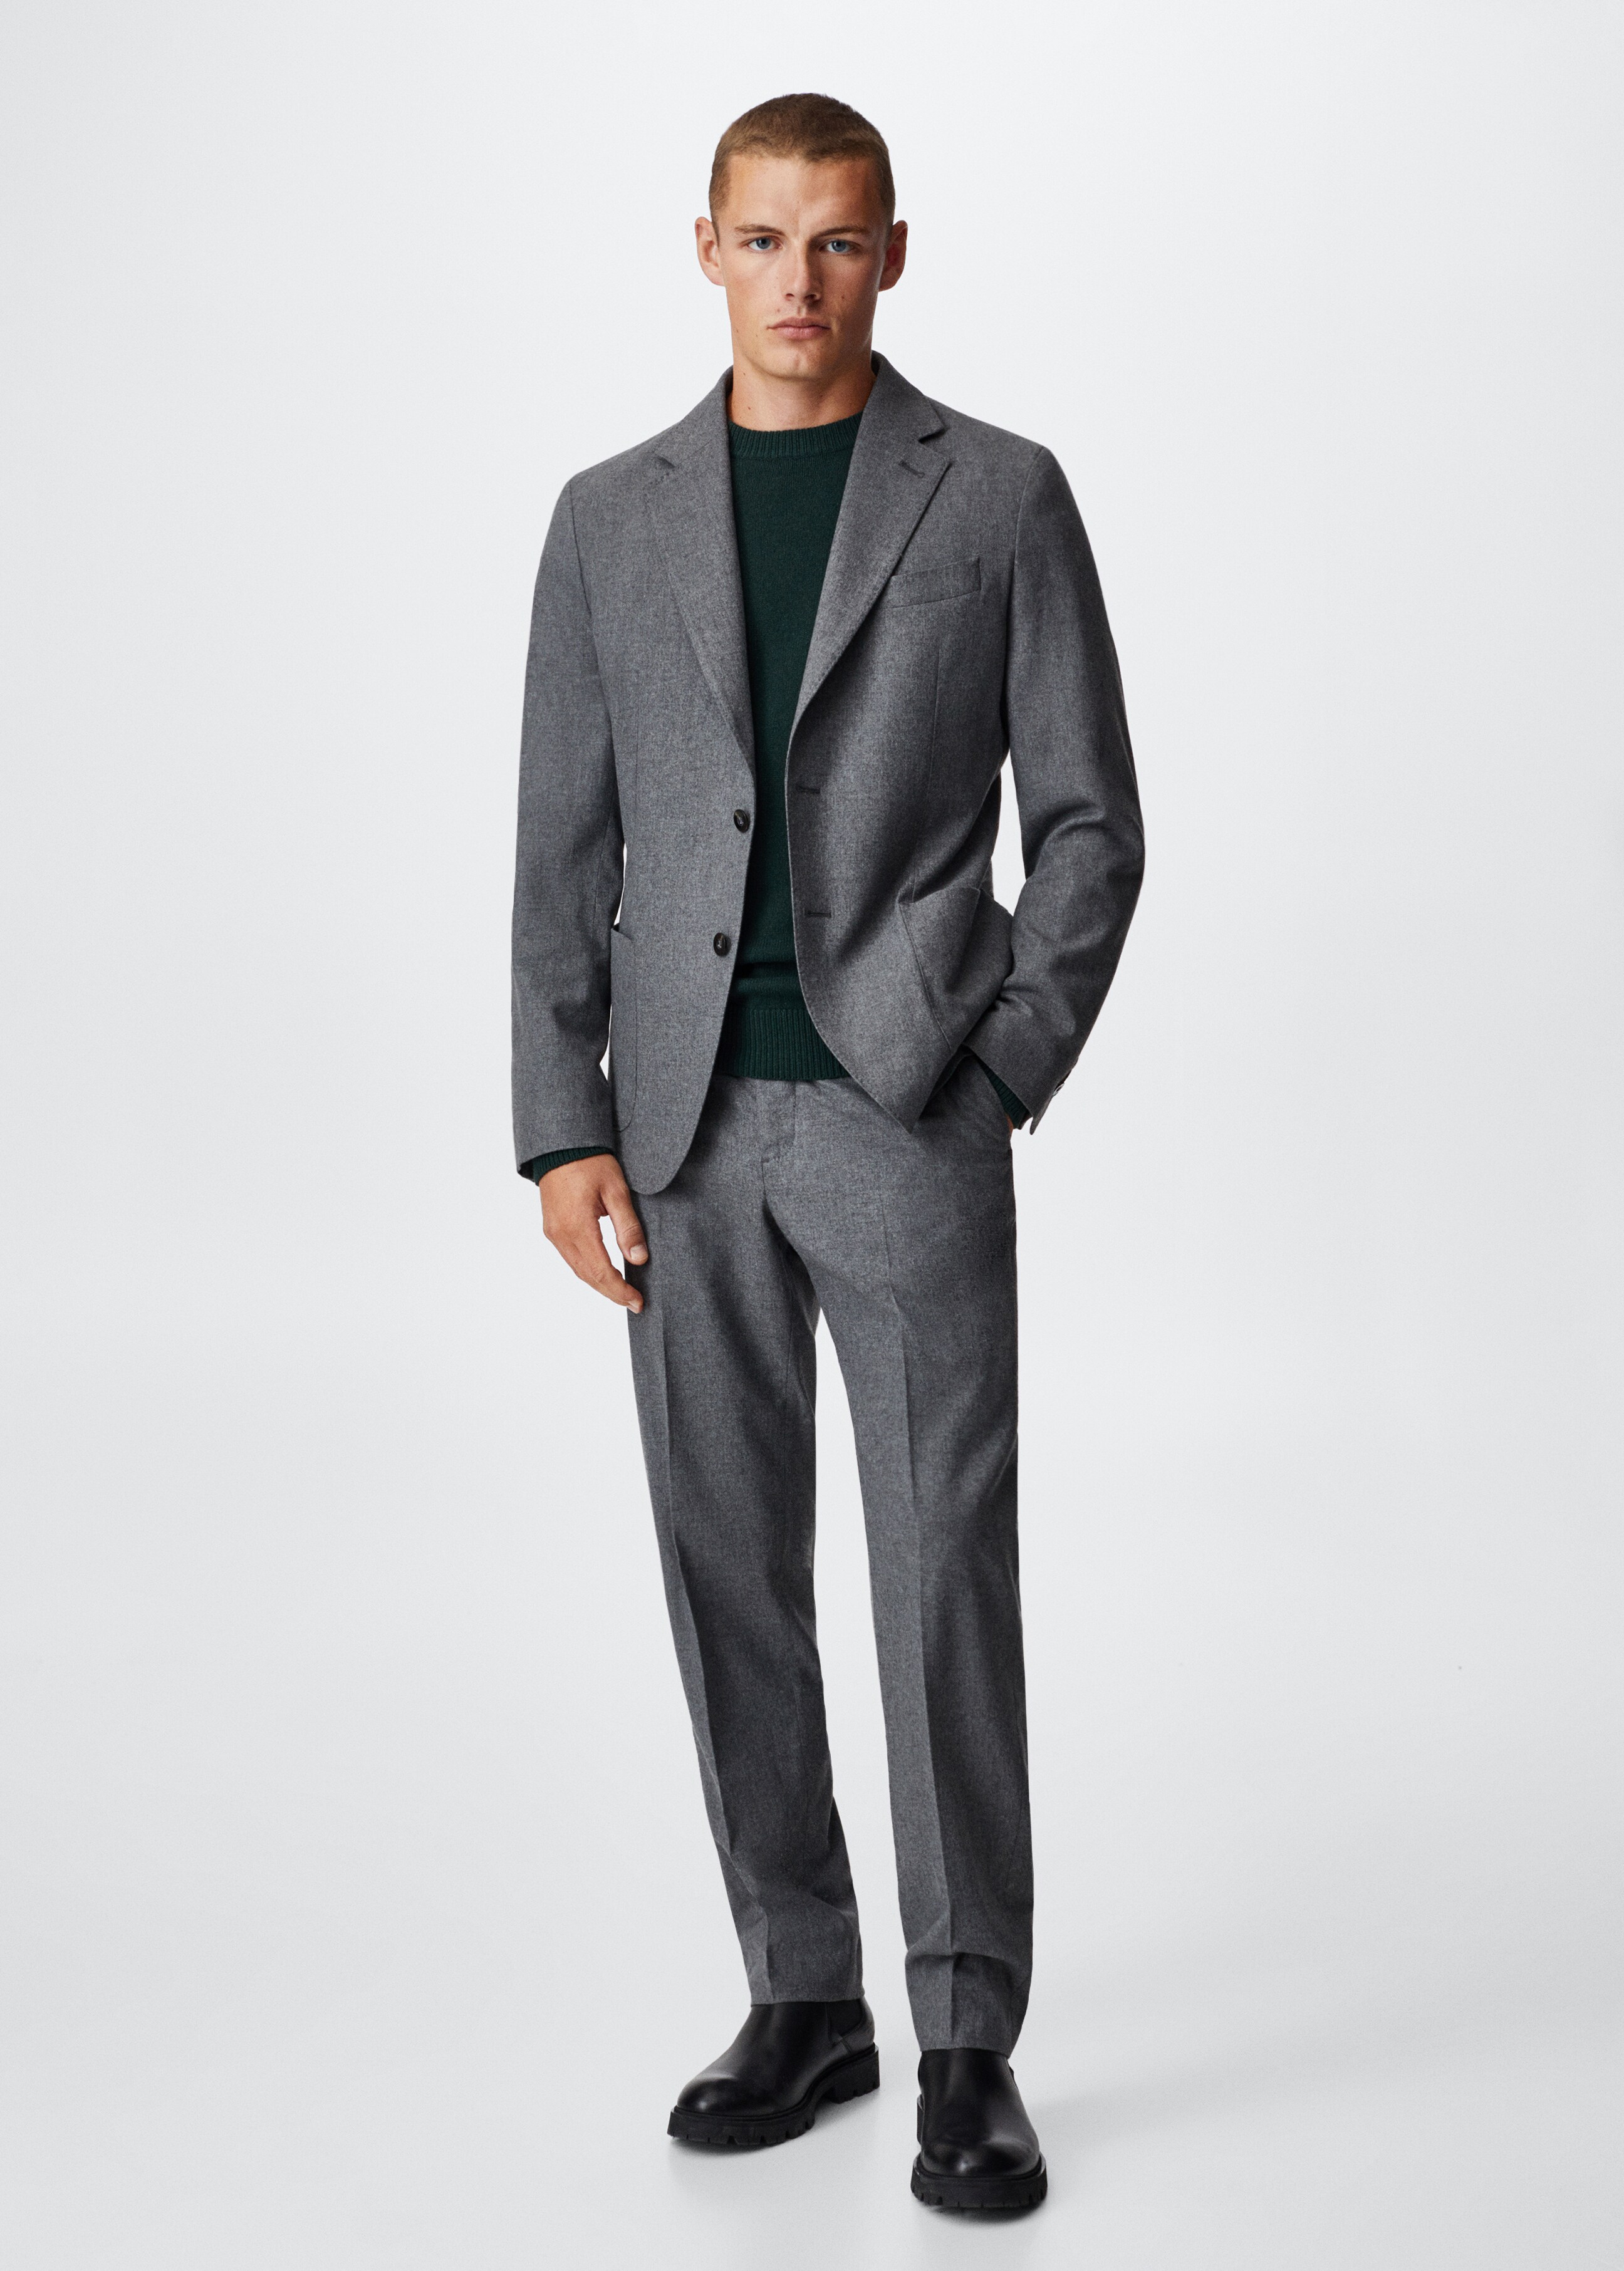 Slim fit wool suit trousers - General plane